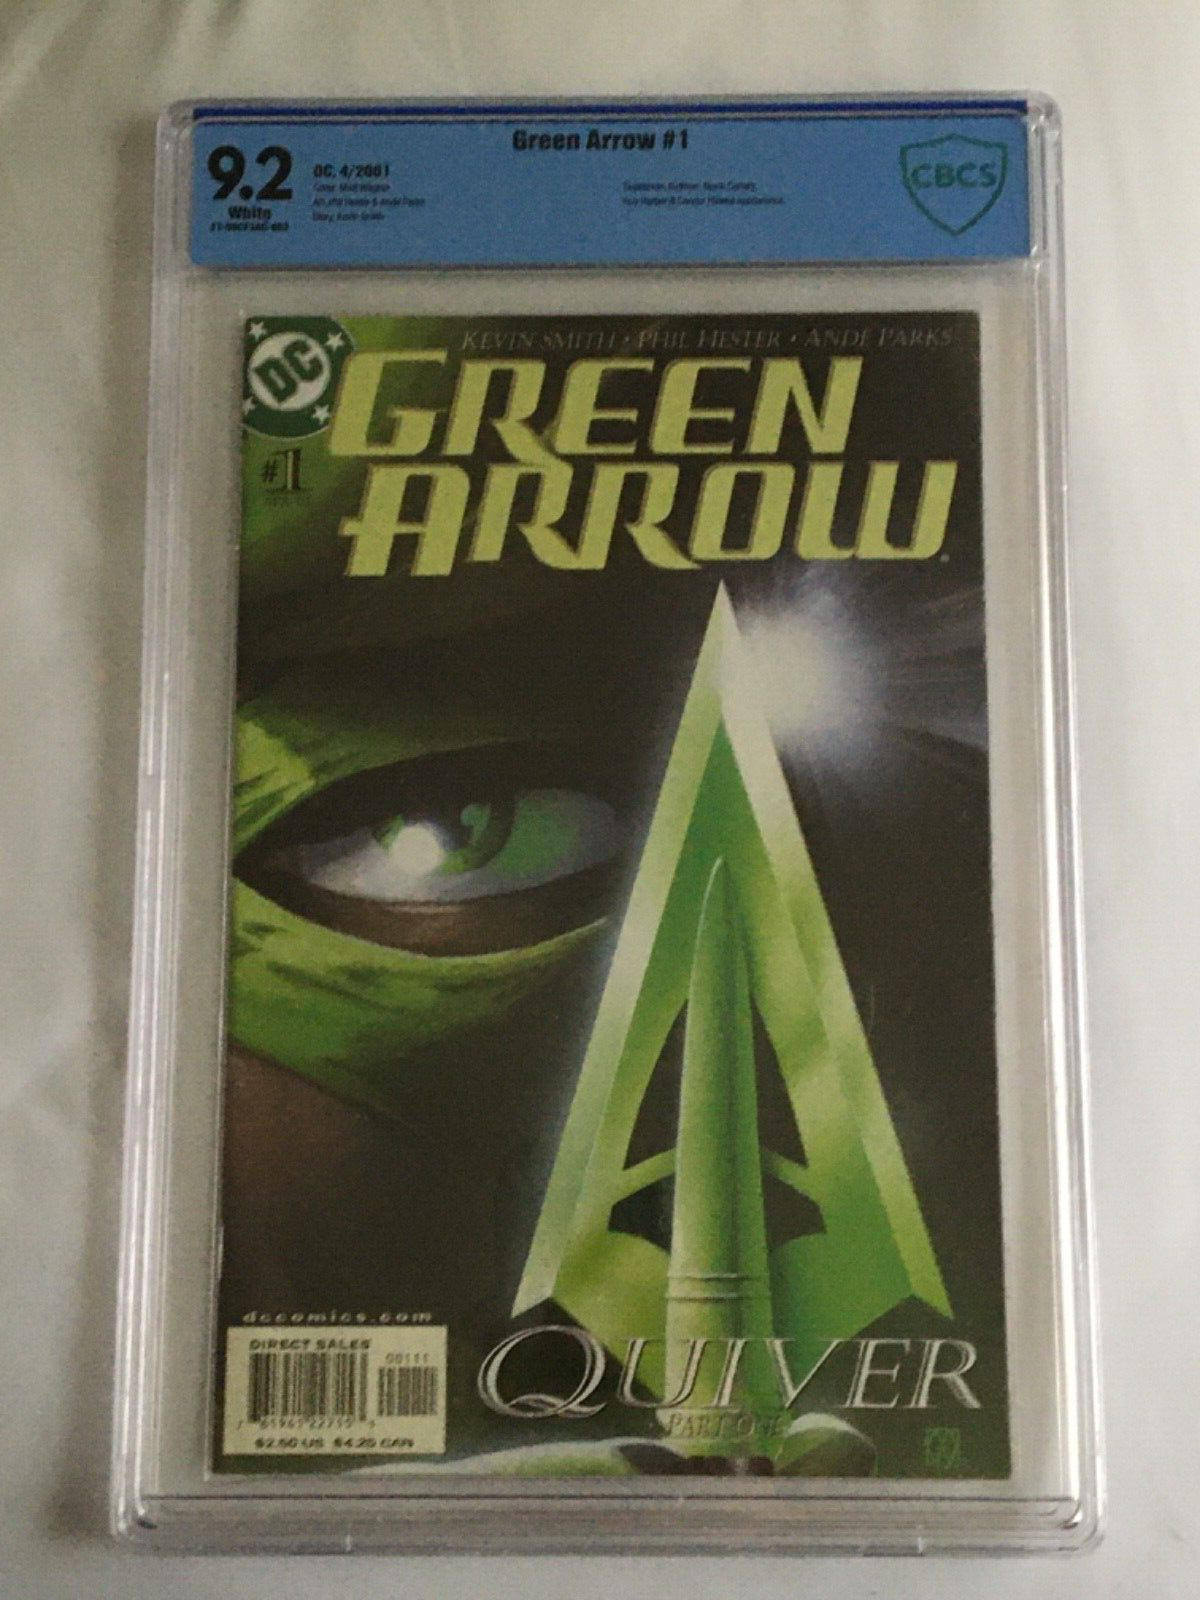 Green Arrow #1 cbcs 9.2 (Old Slab)